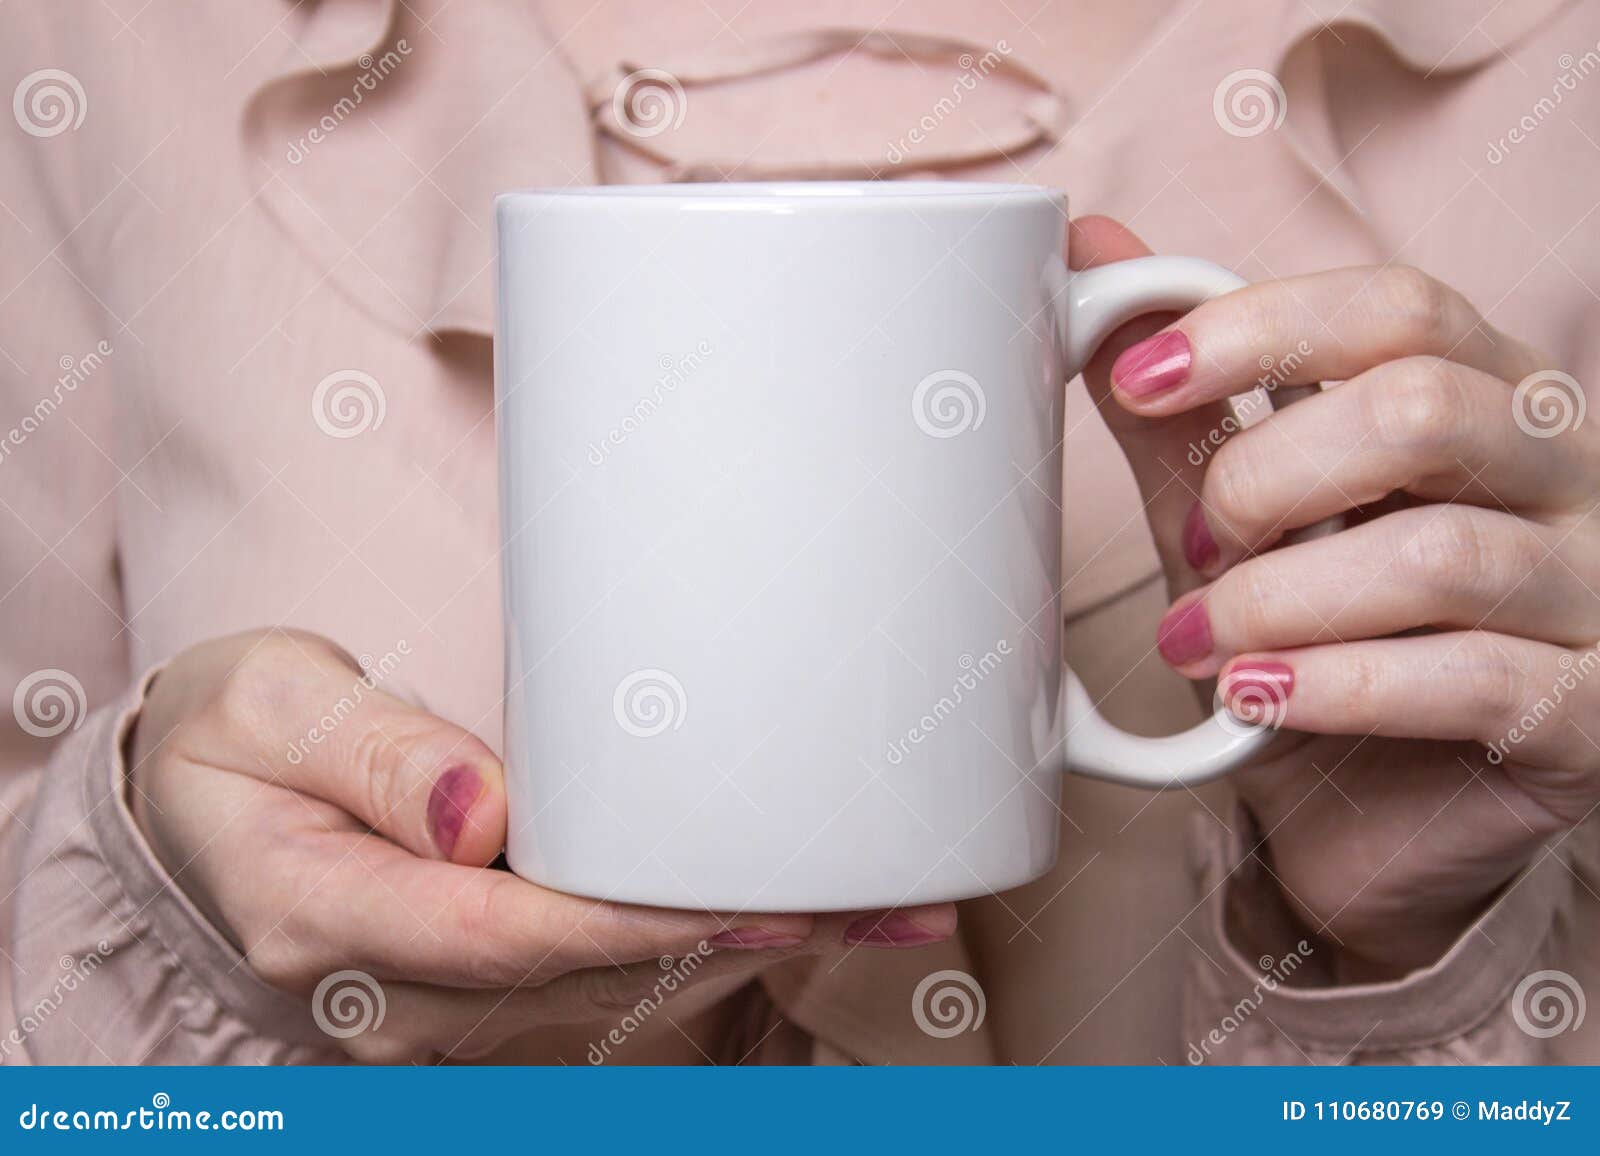 https://thumbs.dreamstime.com/z/girl-holding-white-cup-hands-mug-woman-gift-mockup-designs-110680769.jpg